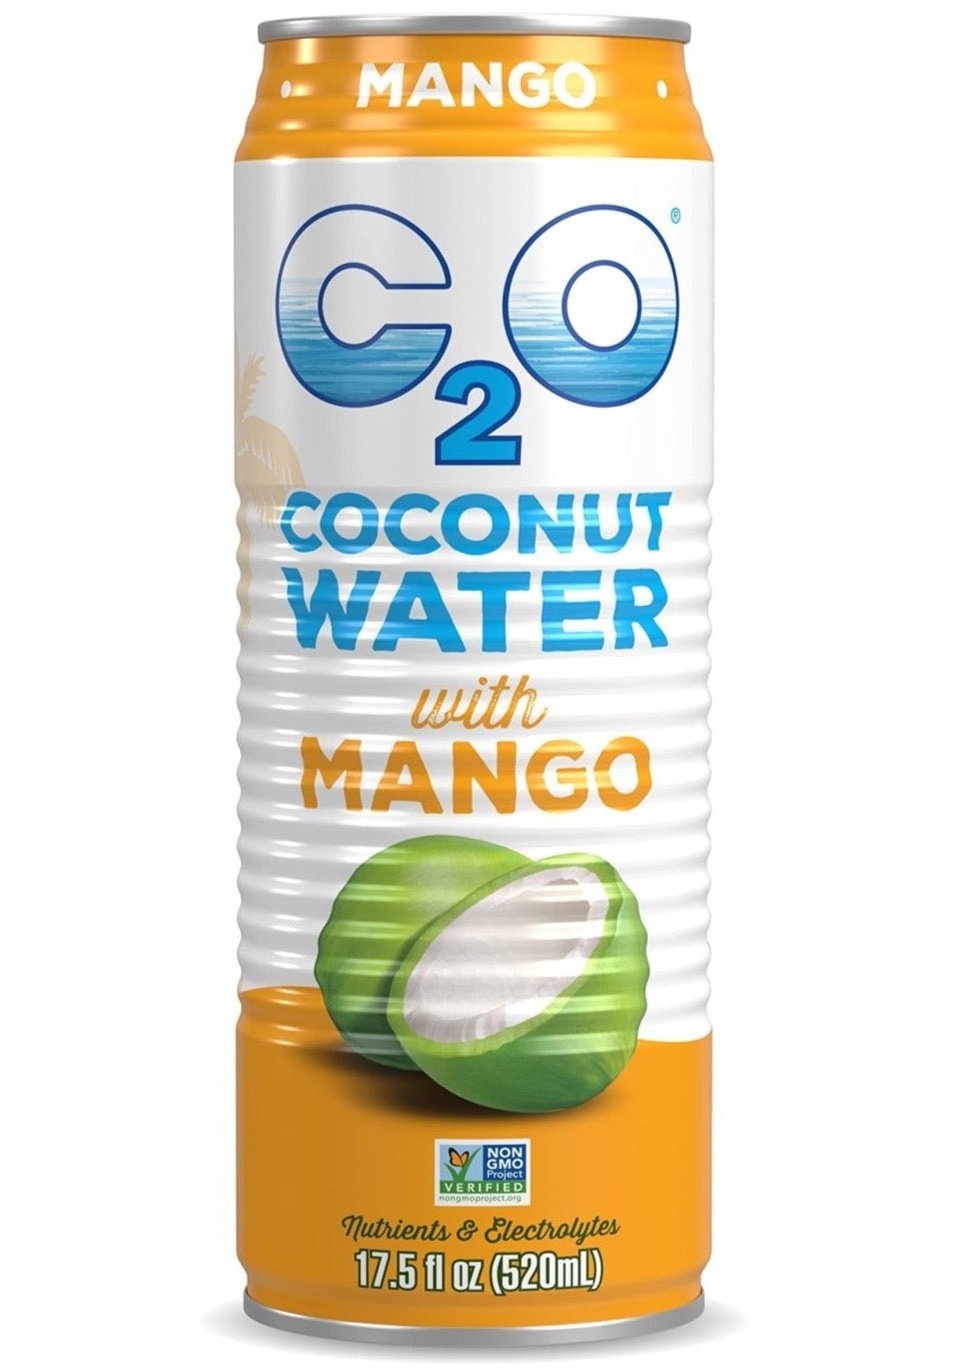 C2O Mango Coconut Water